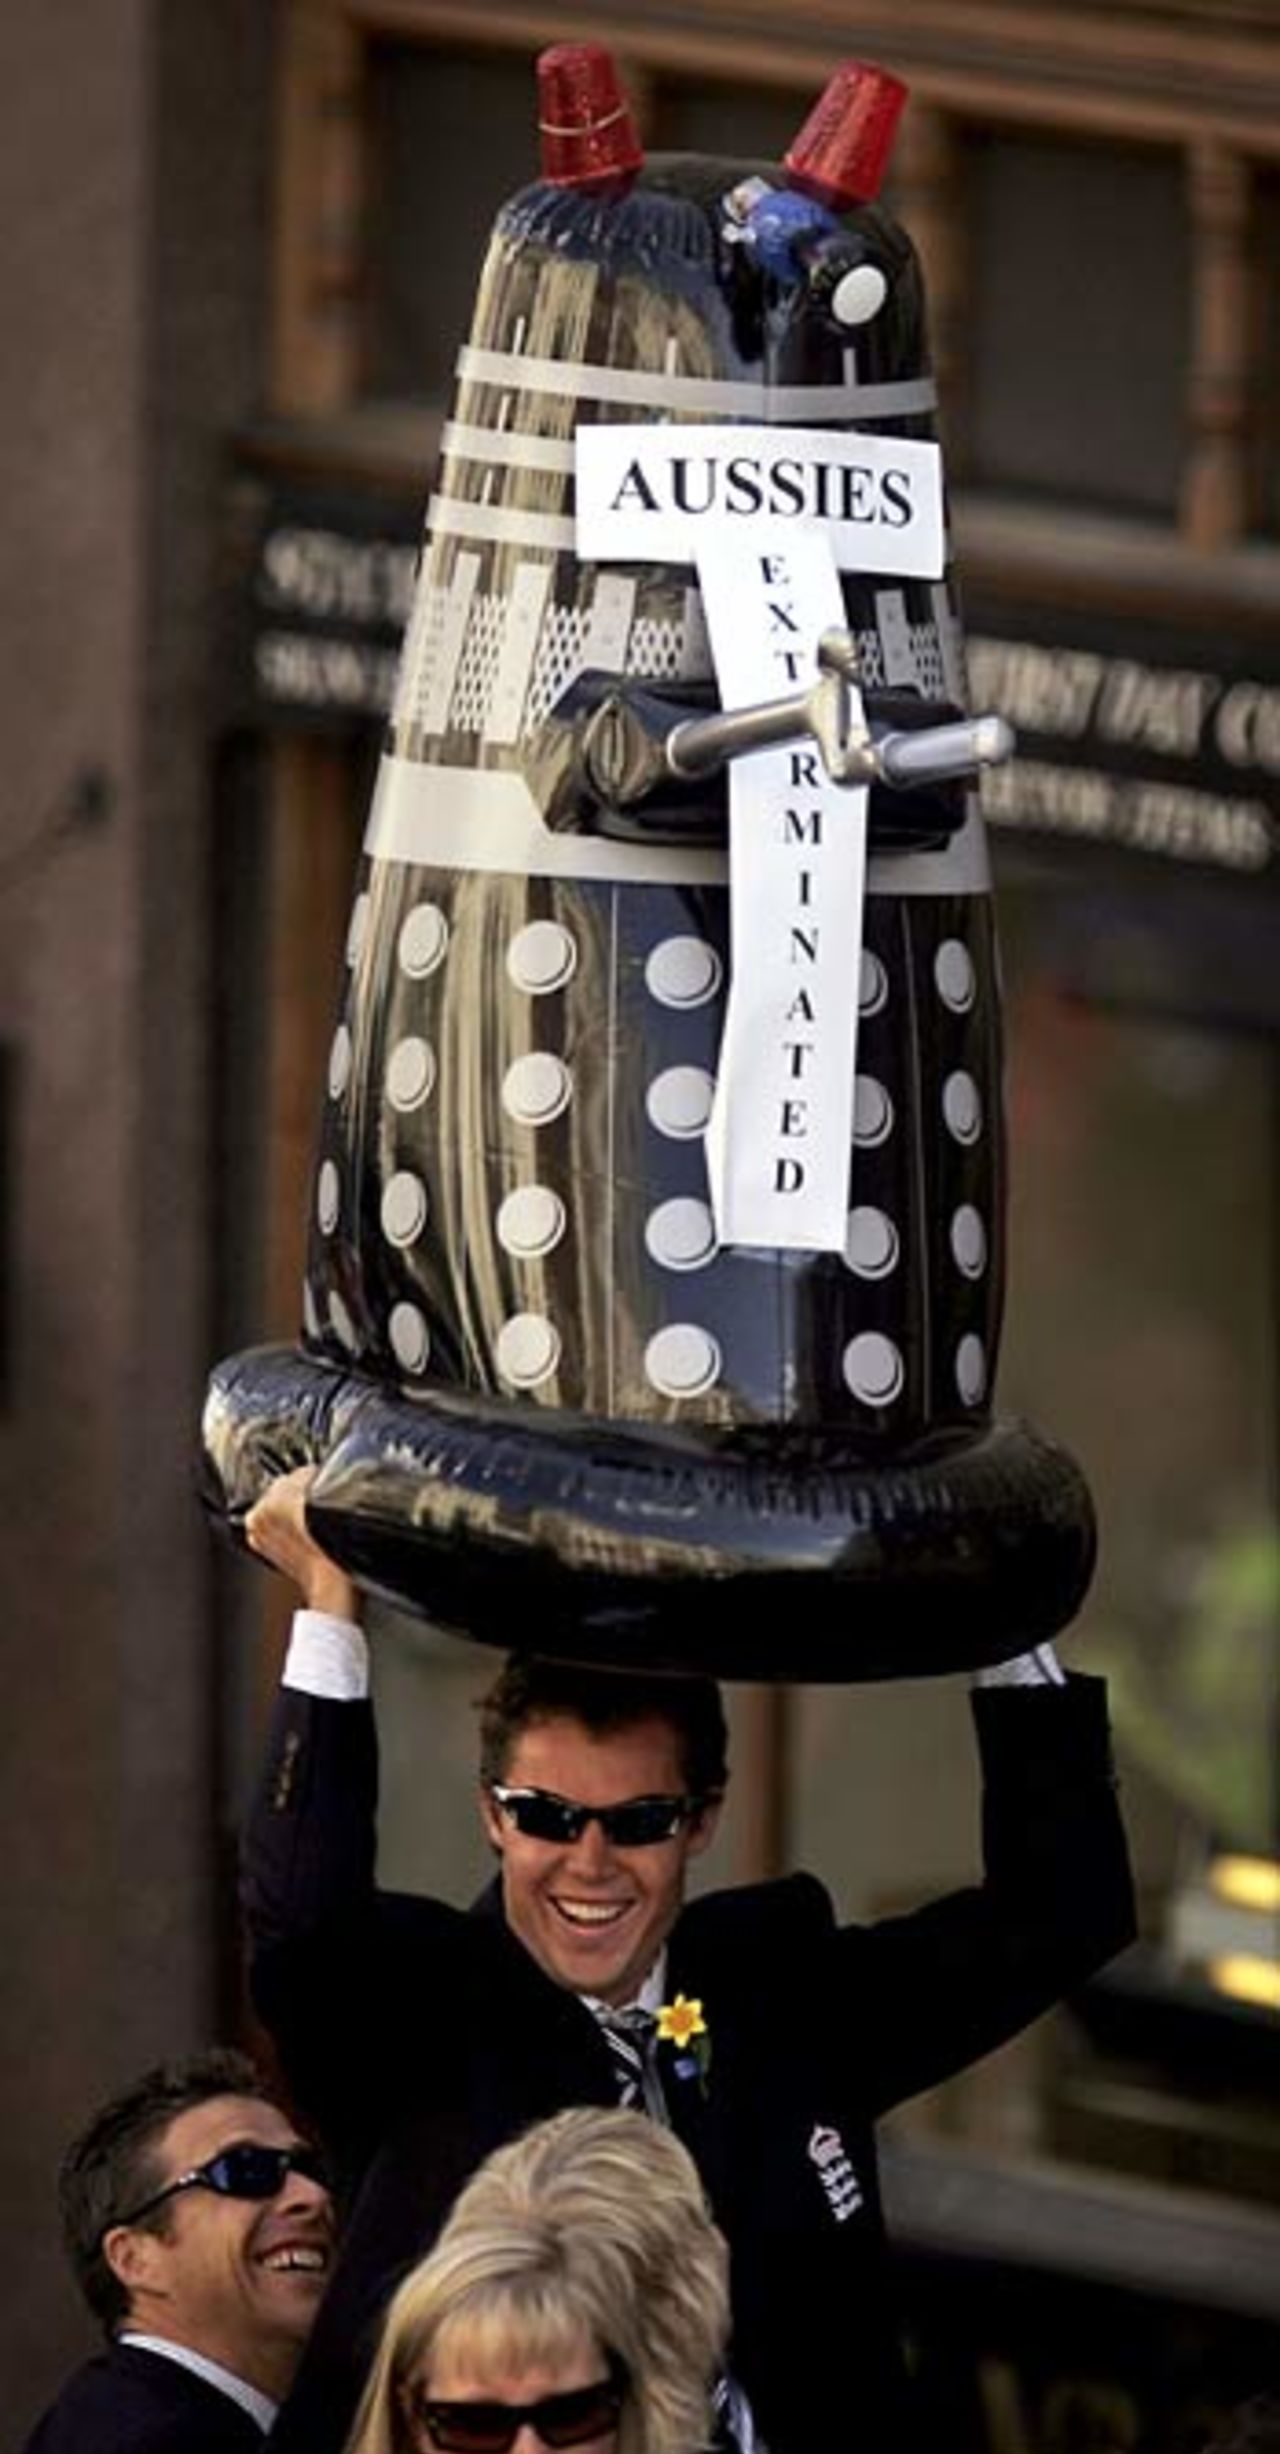 Aussies exterminated - Geraint Jones and his Dalek, London,  September 13, 2005